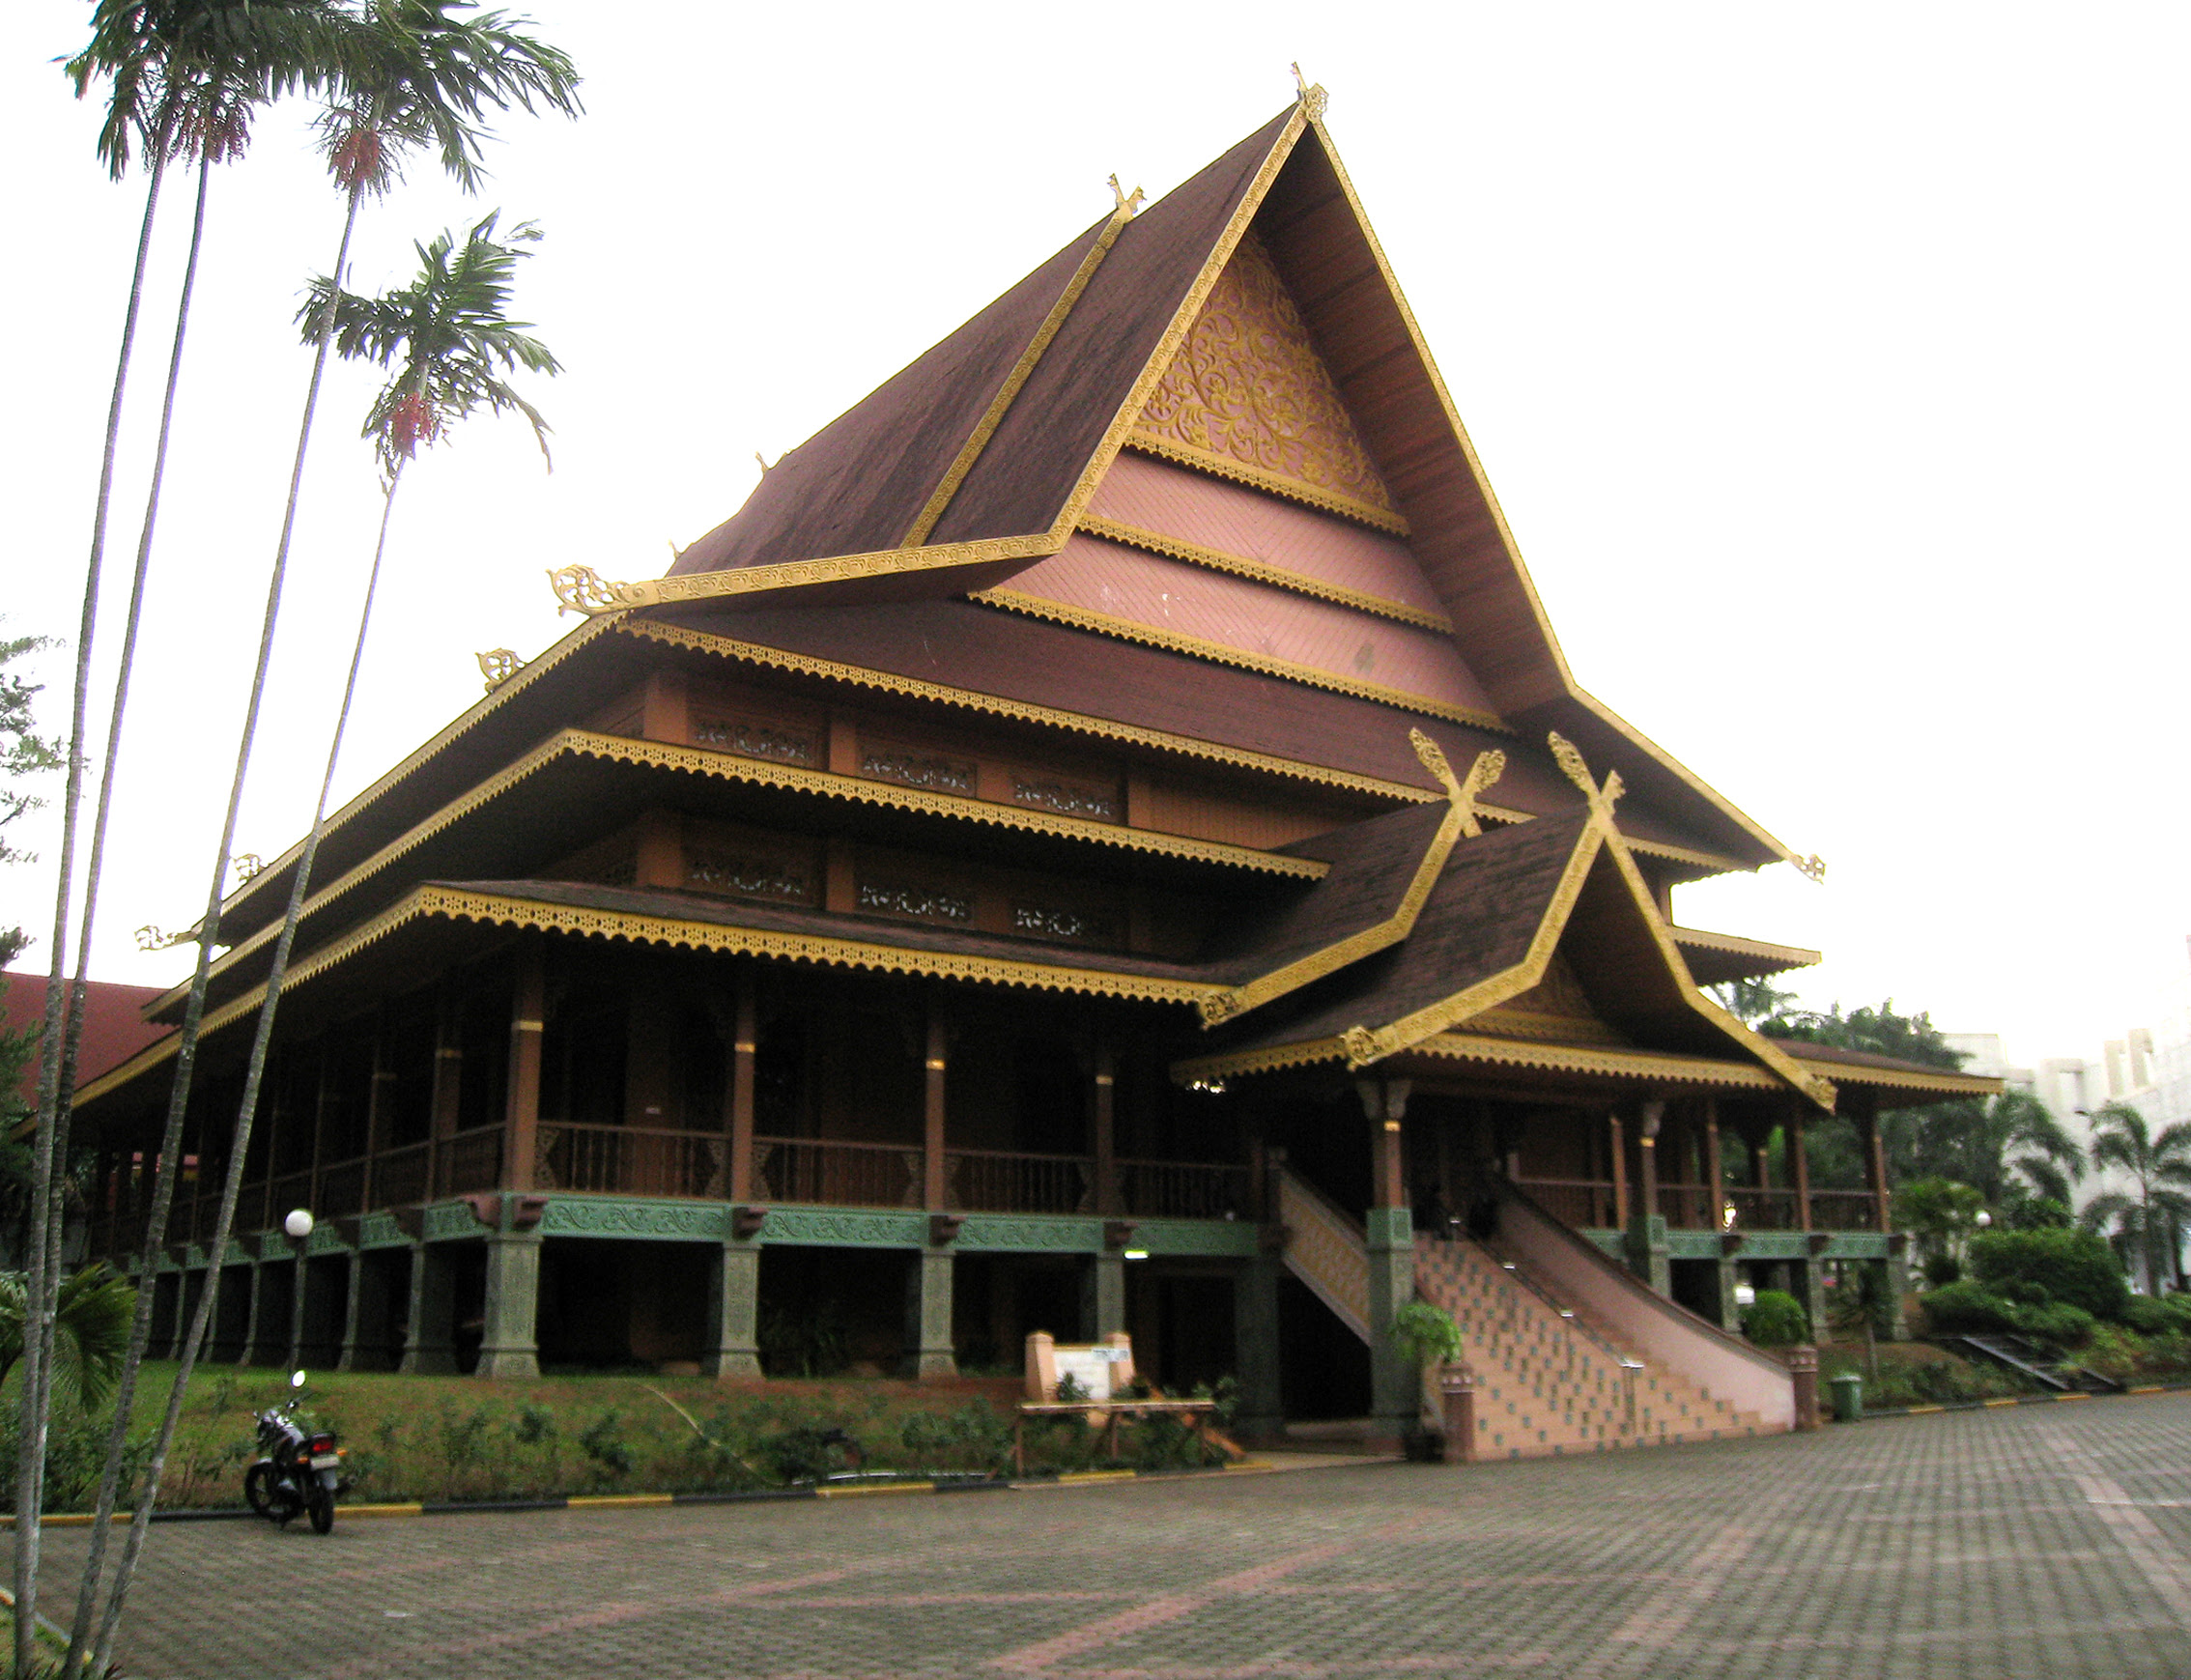  Indonesia  Architecture 